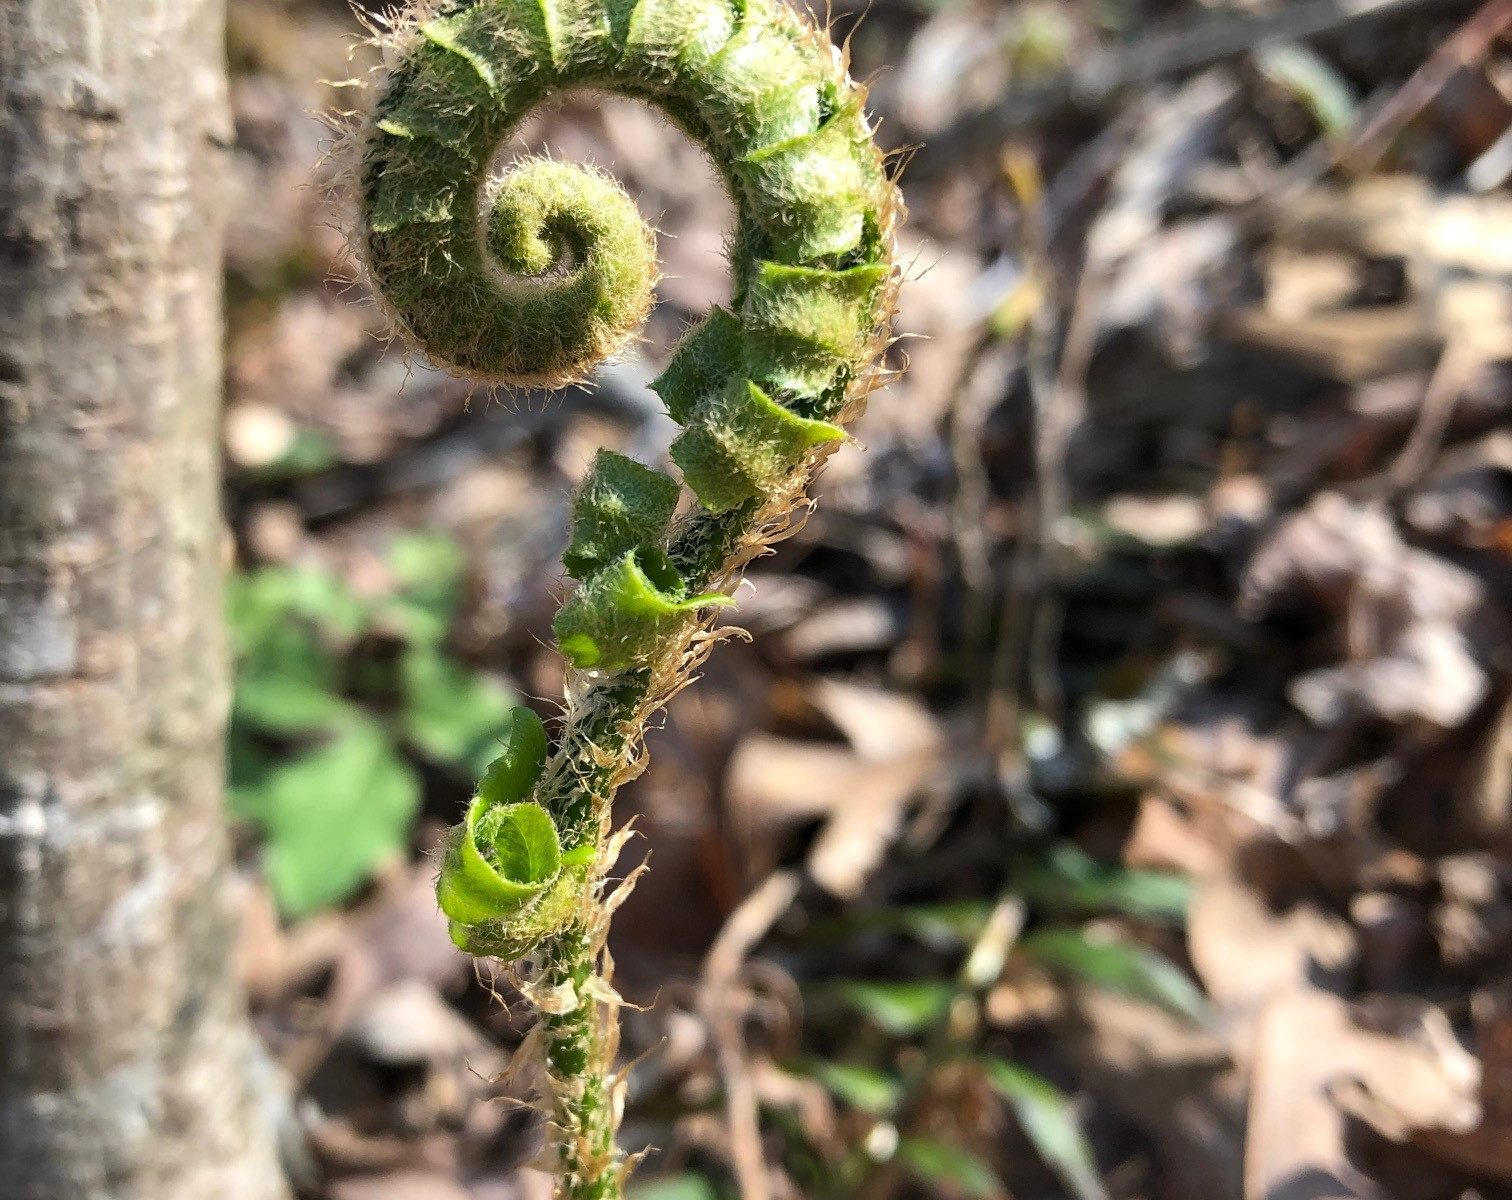 picture of a fern fiddlehead